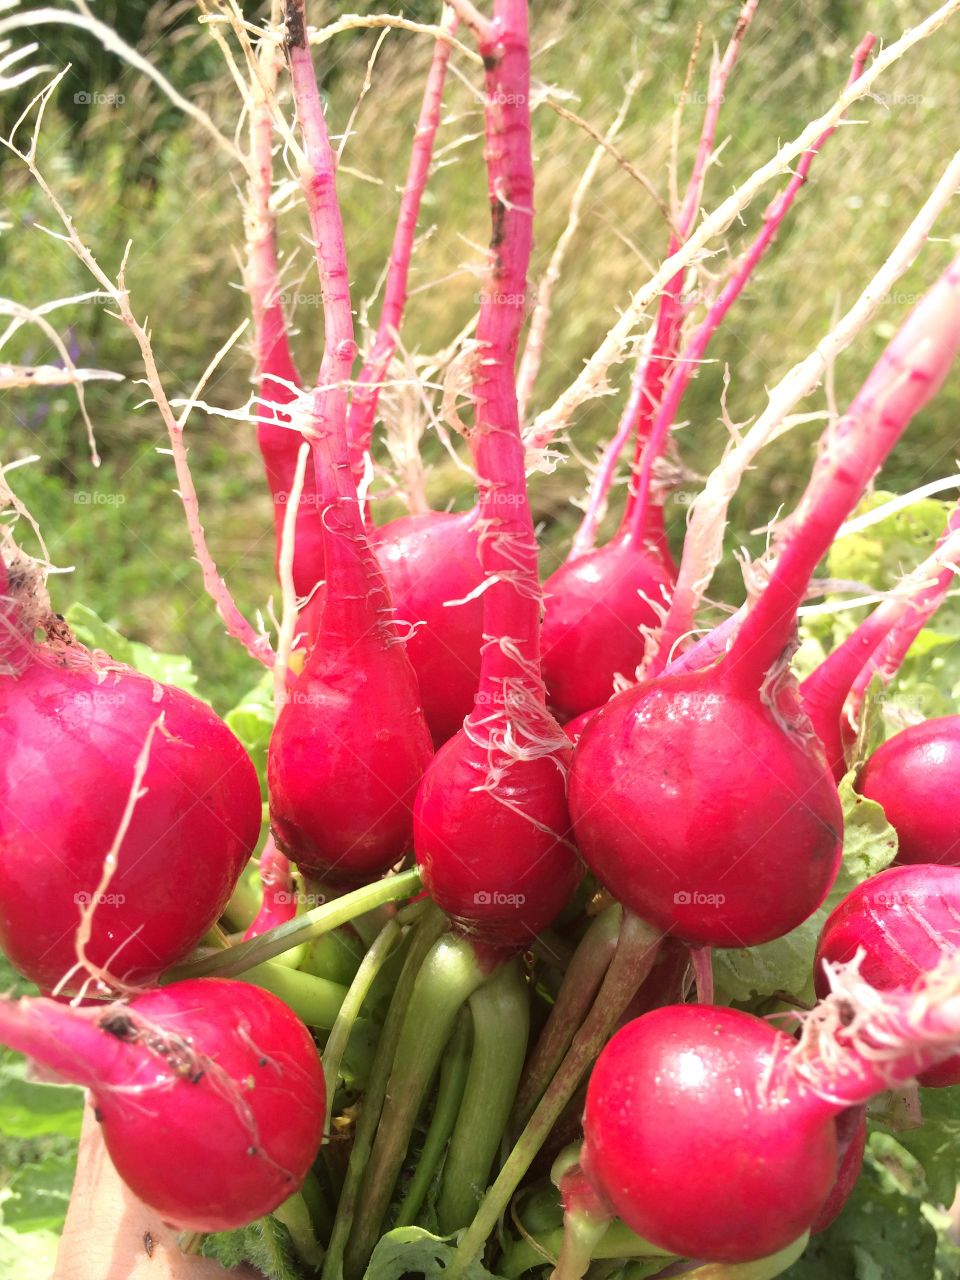 Organic Red Radishes. Fresh picked, red radishes